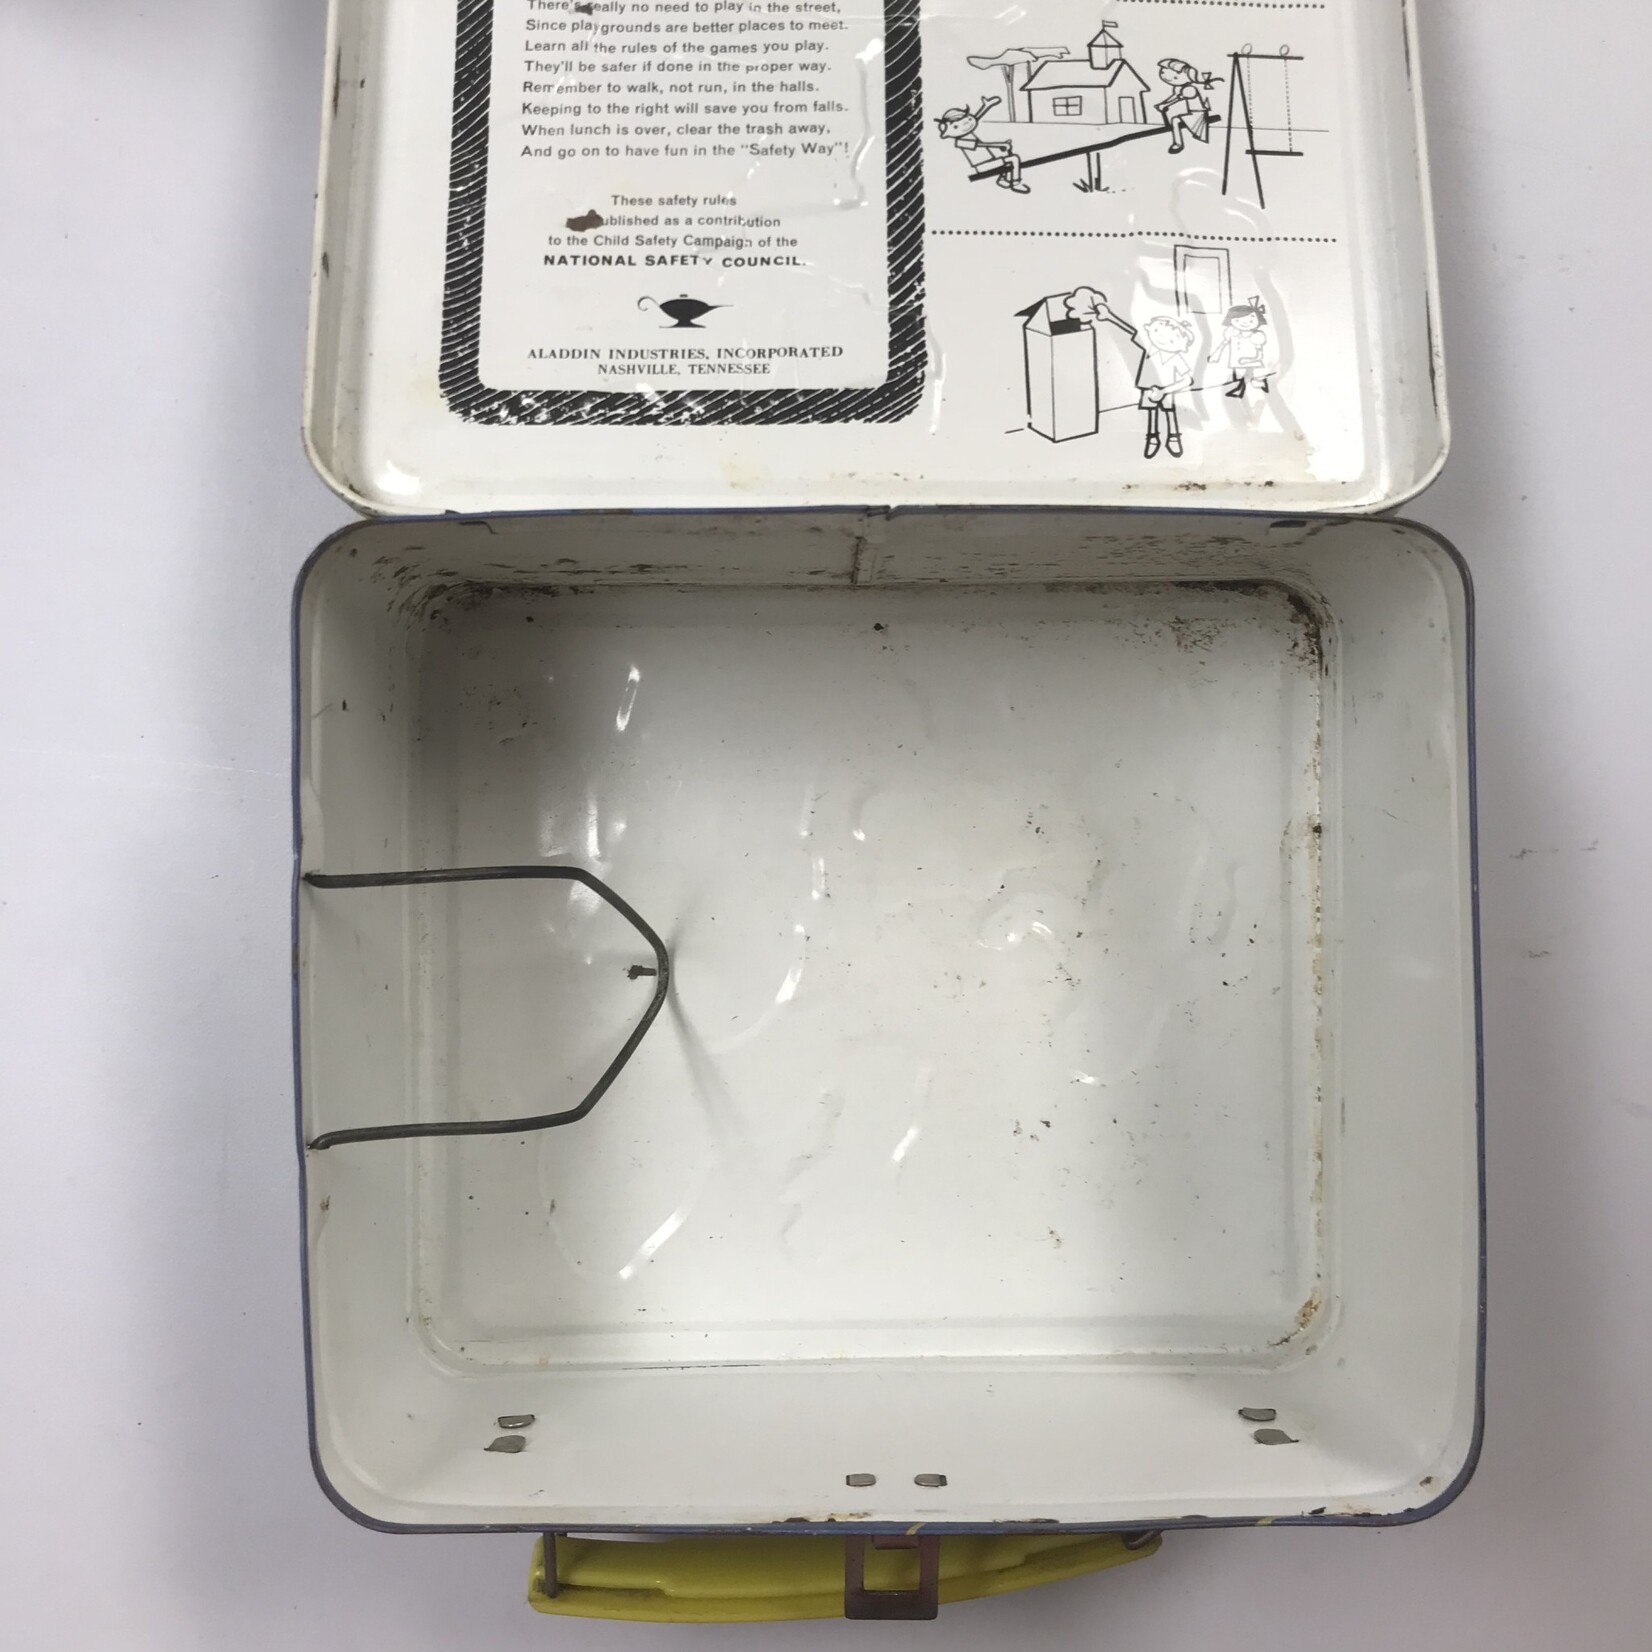 Battlestar Galactica (1978) No Thermos - Metal Lunch Box (Vintage